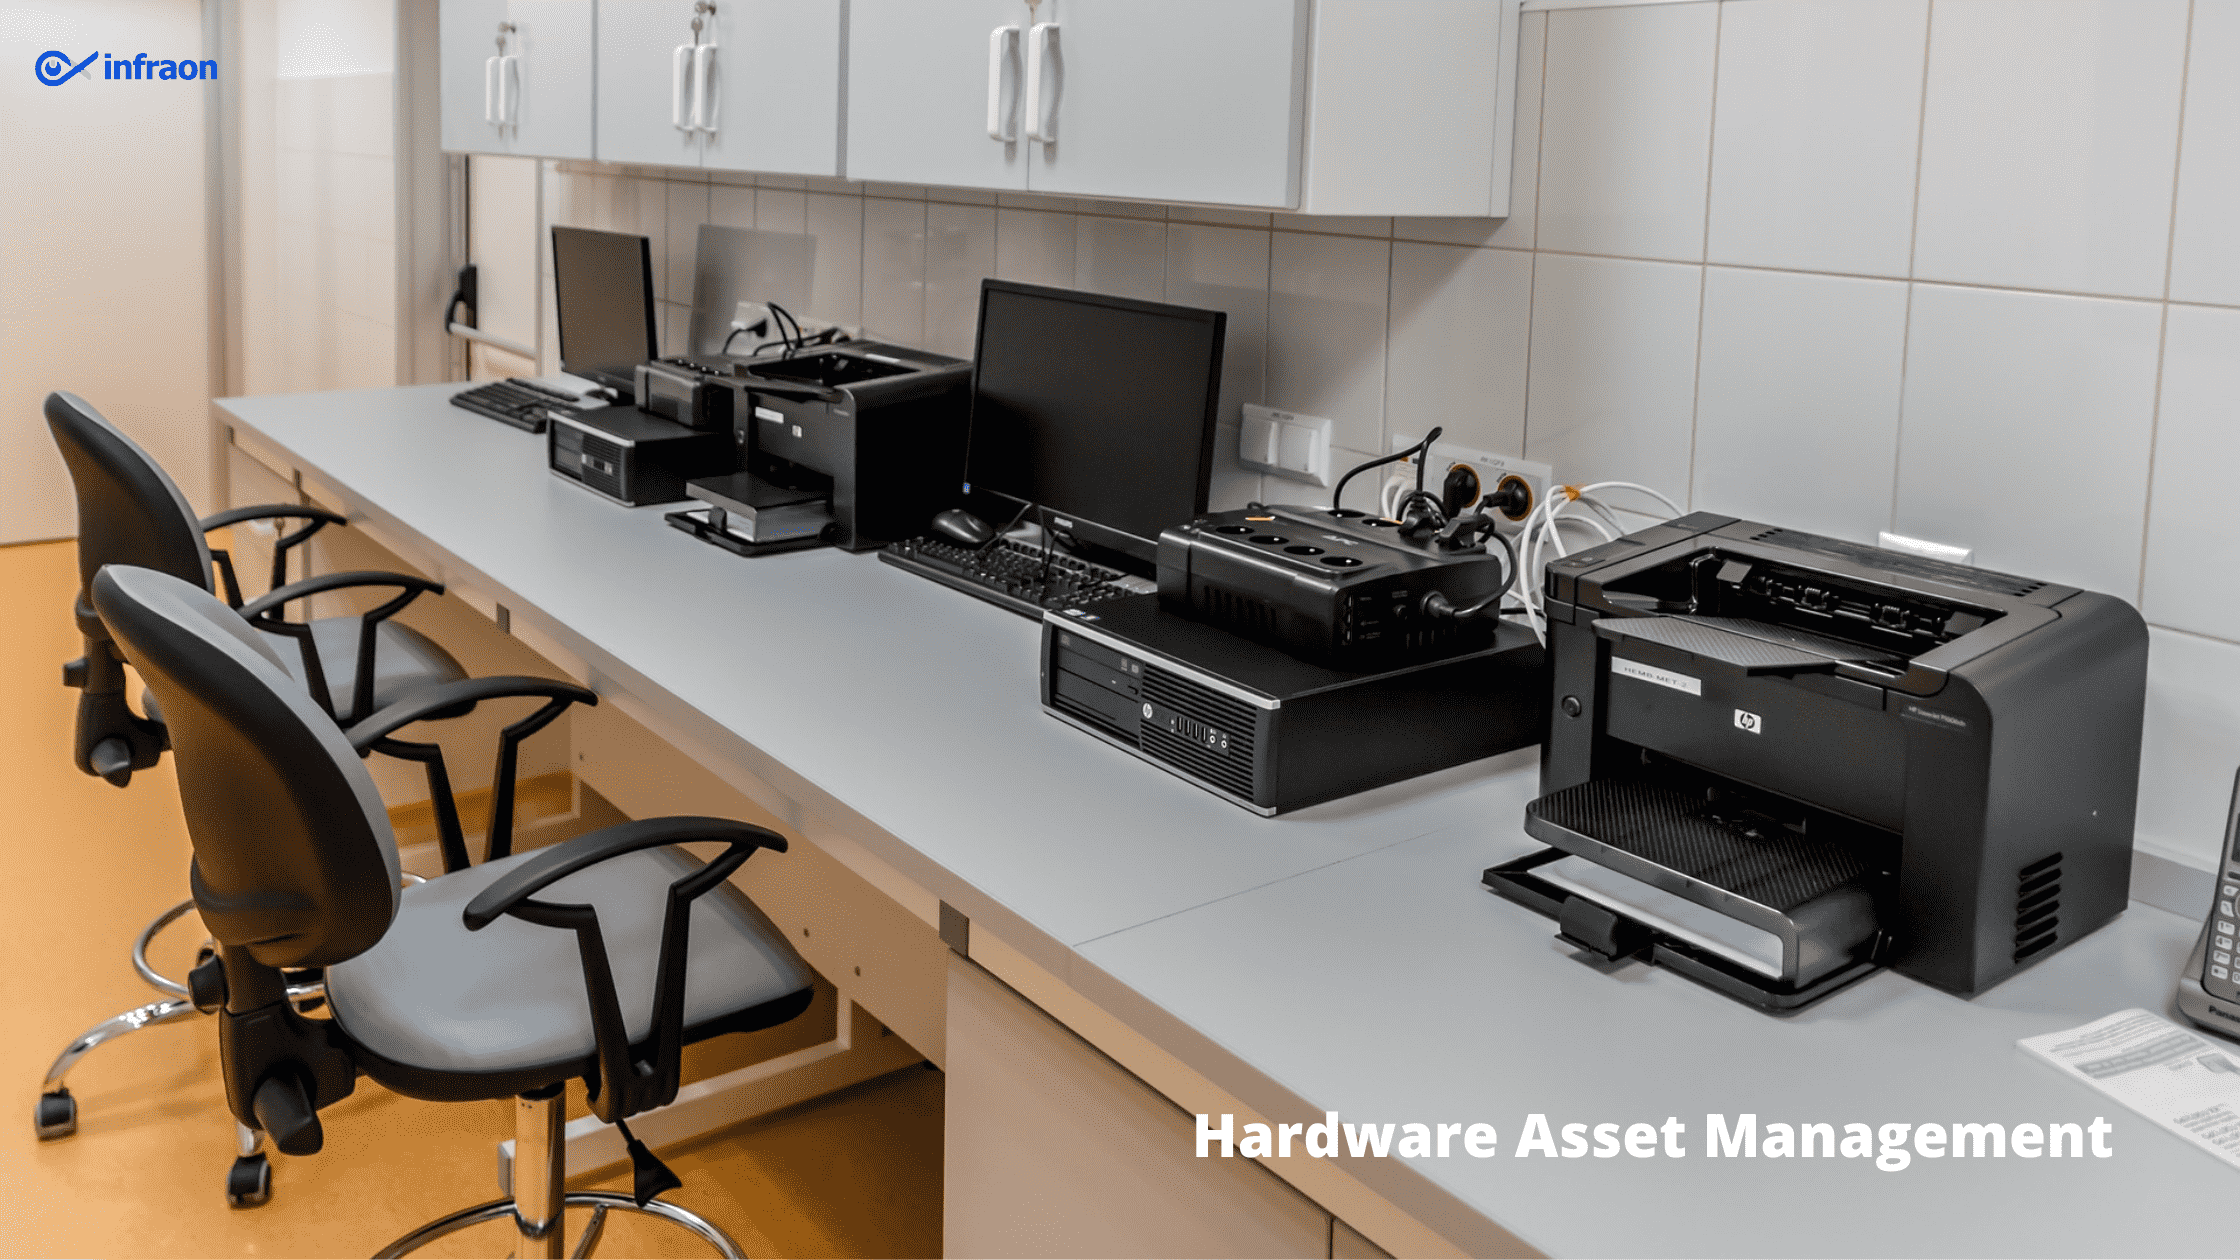 Hardware Asset Management